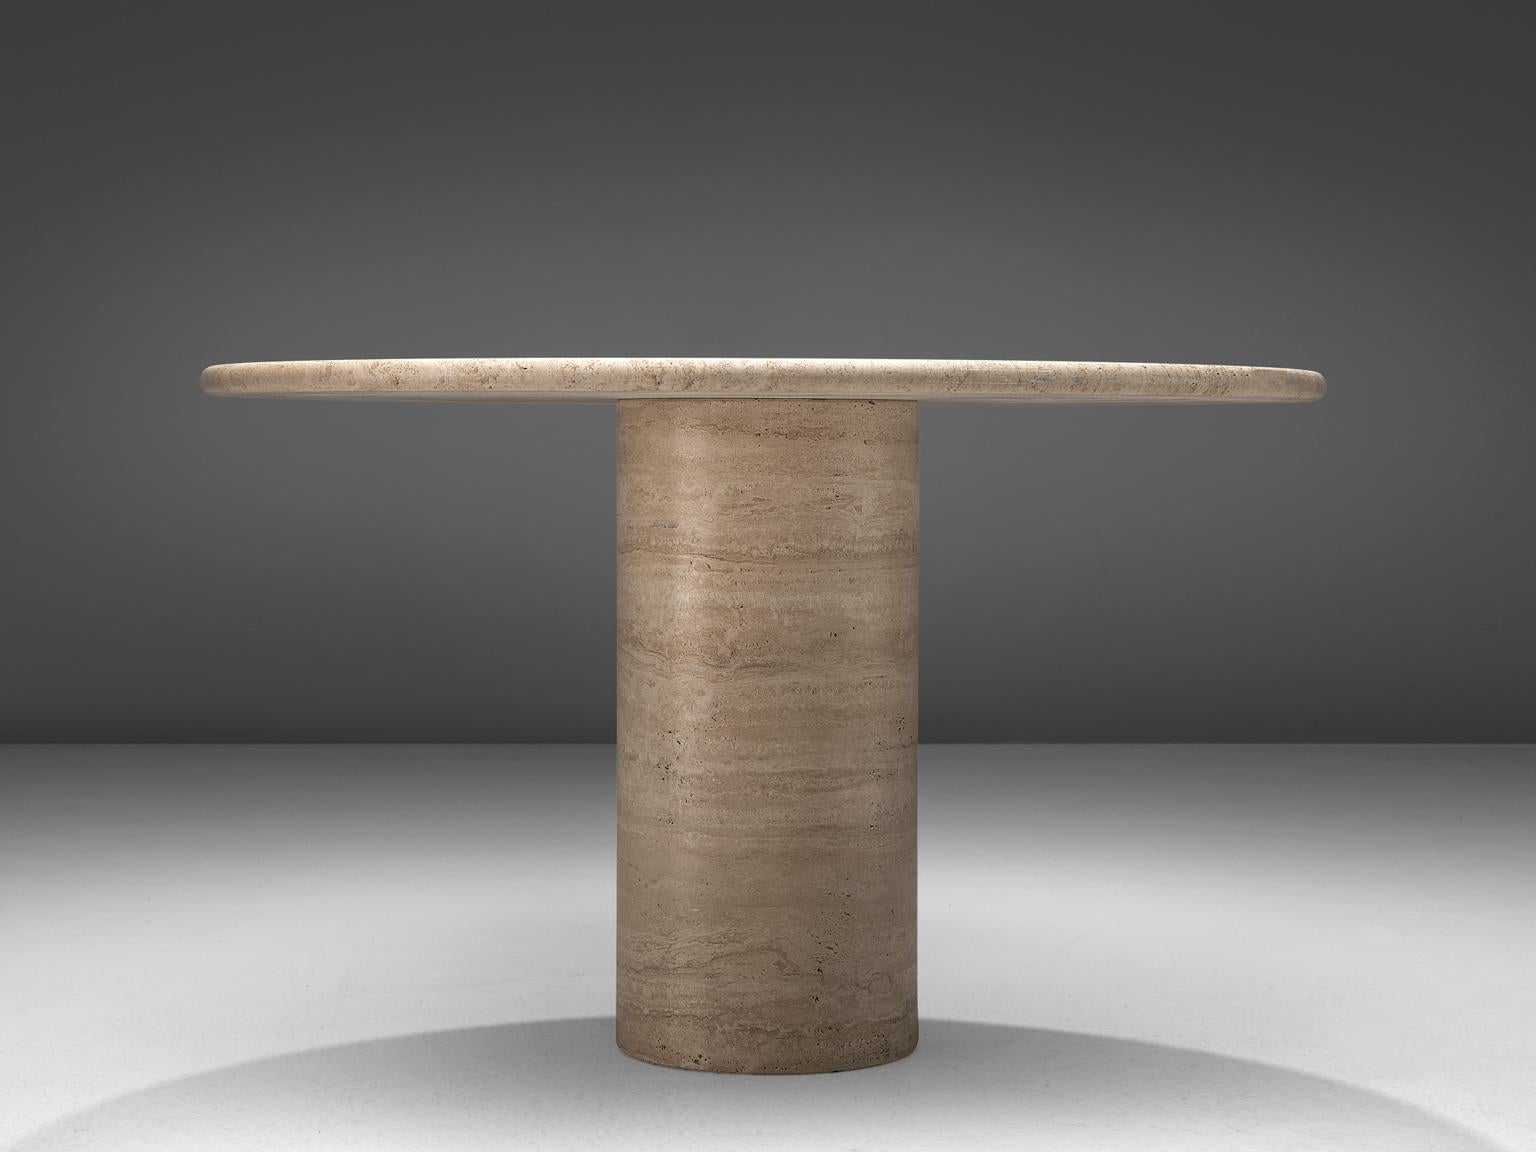 round travertine table